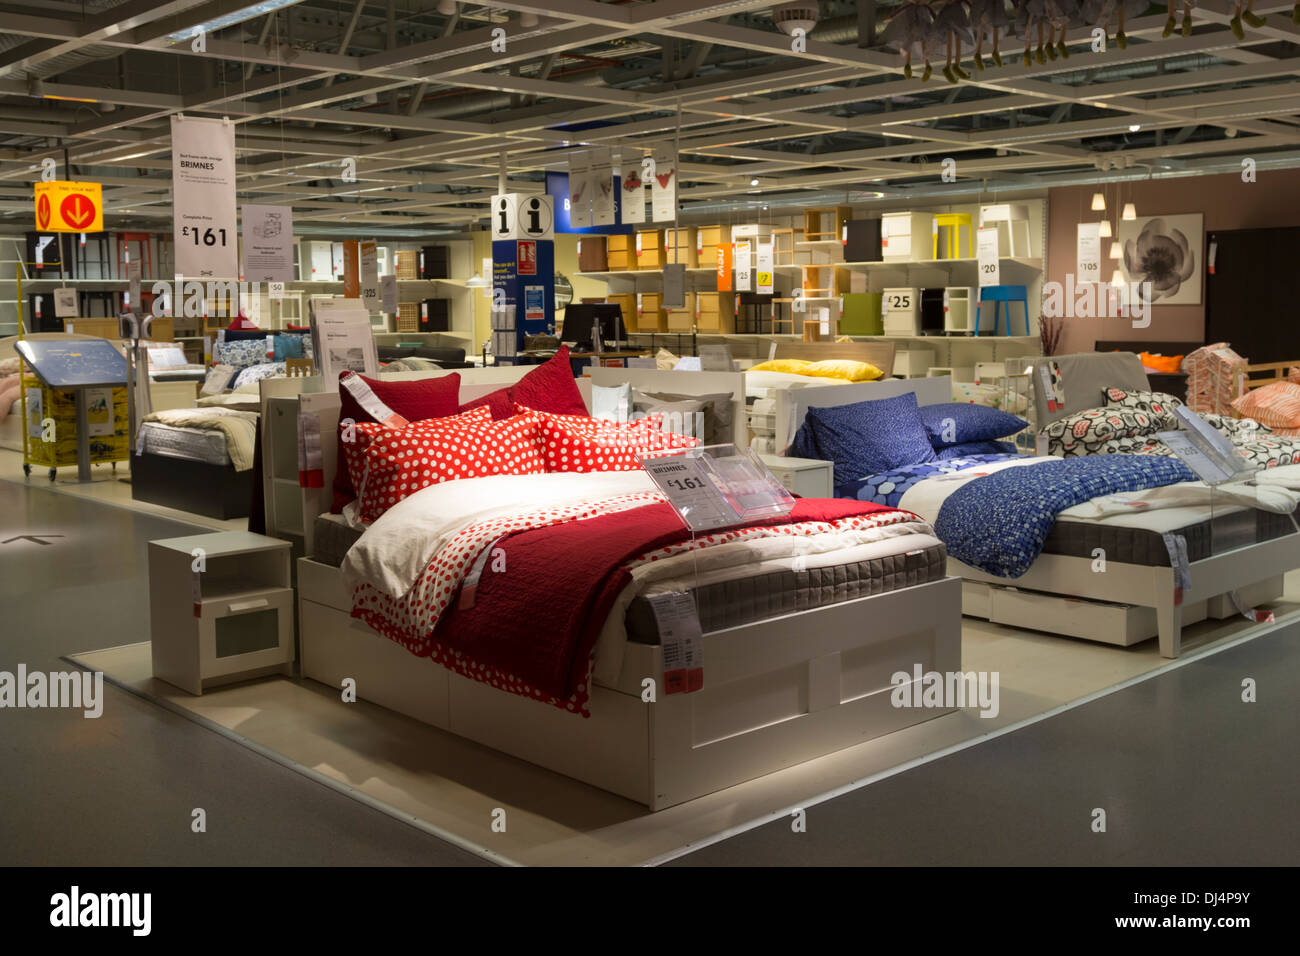 Bedroom Department - Ikea - Edmonton - London Stock Photo - Alamy